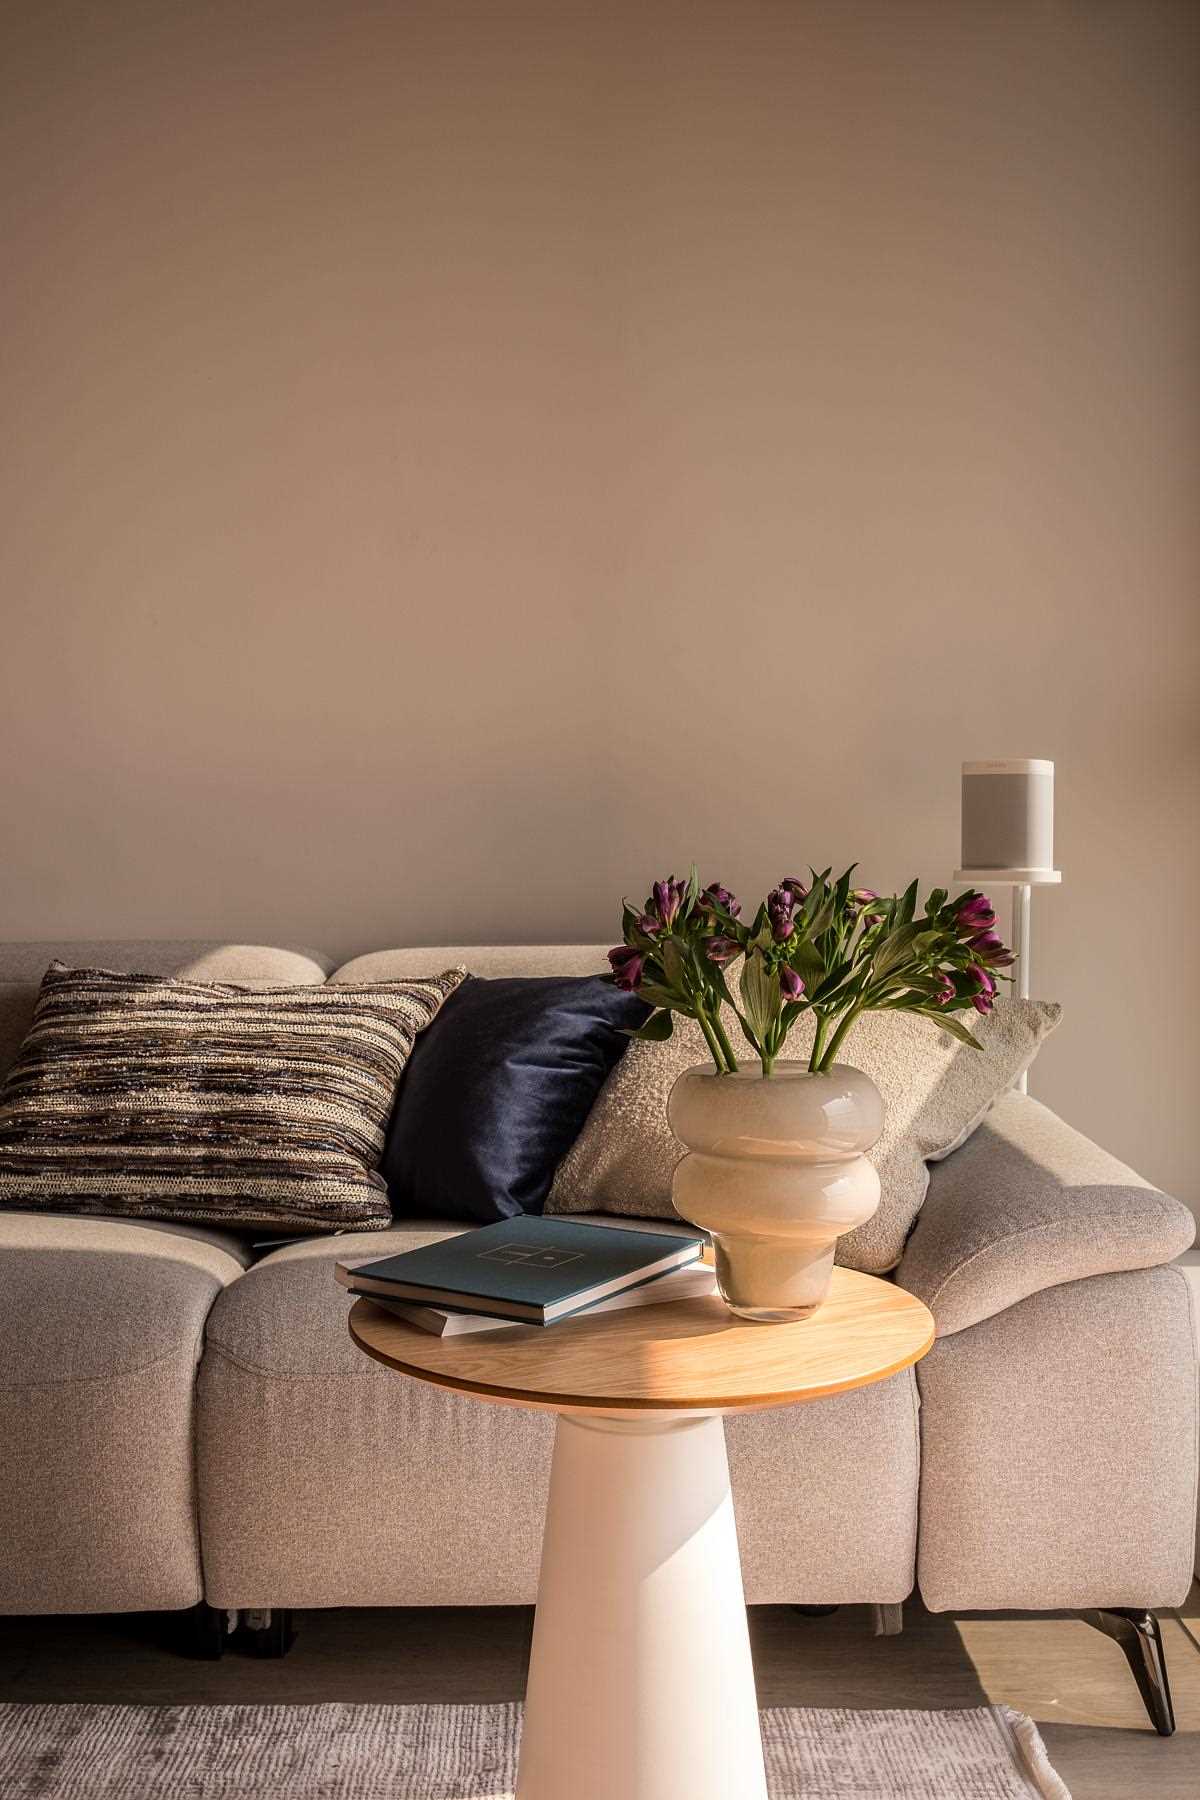 A modern living room with minimalist furnishings.